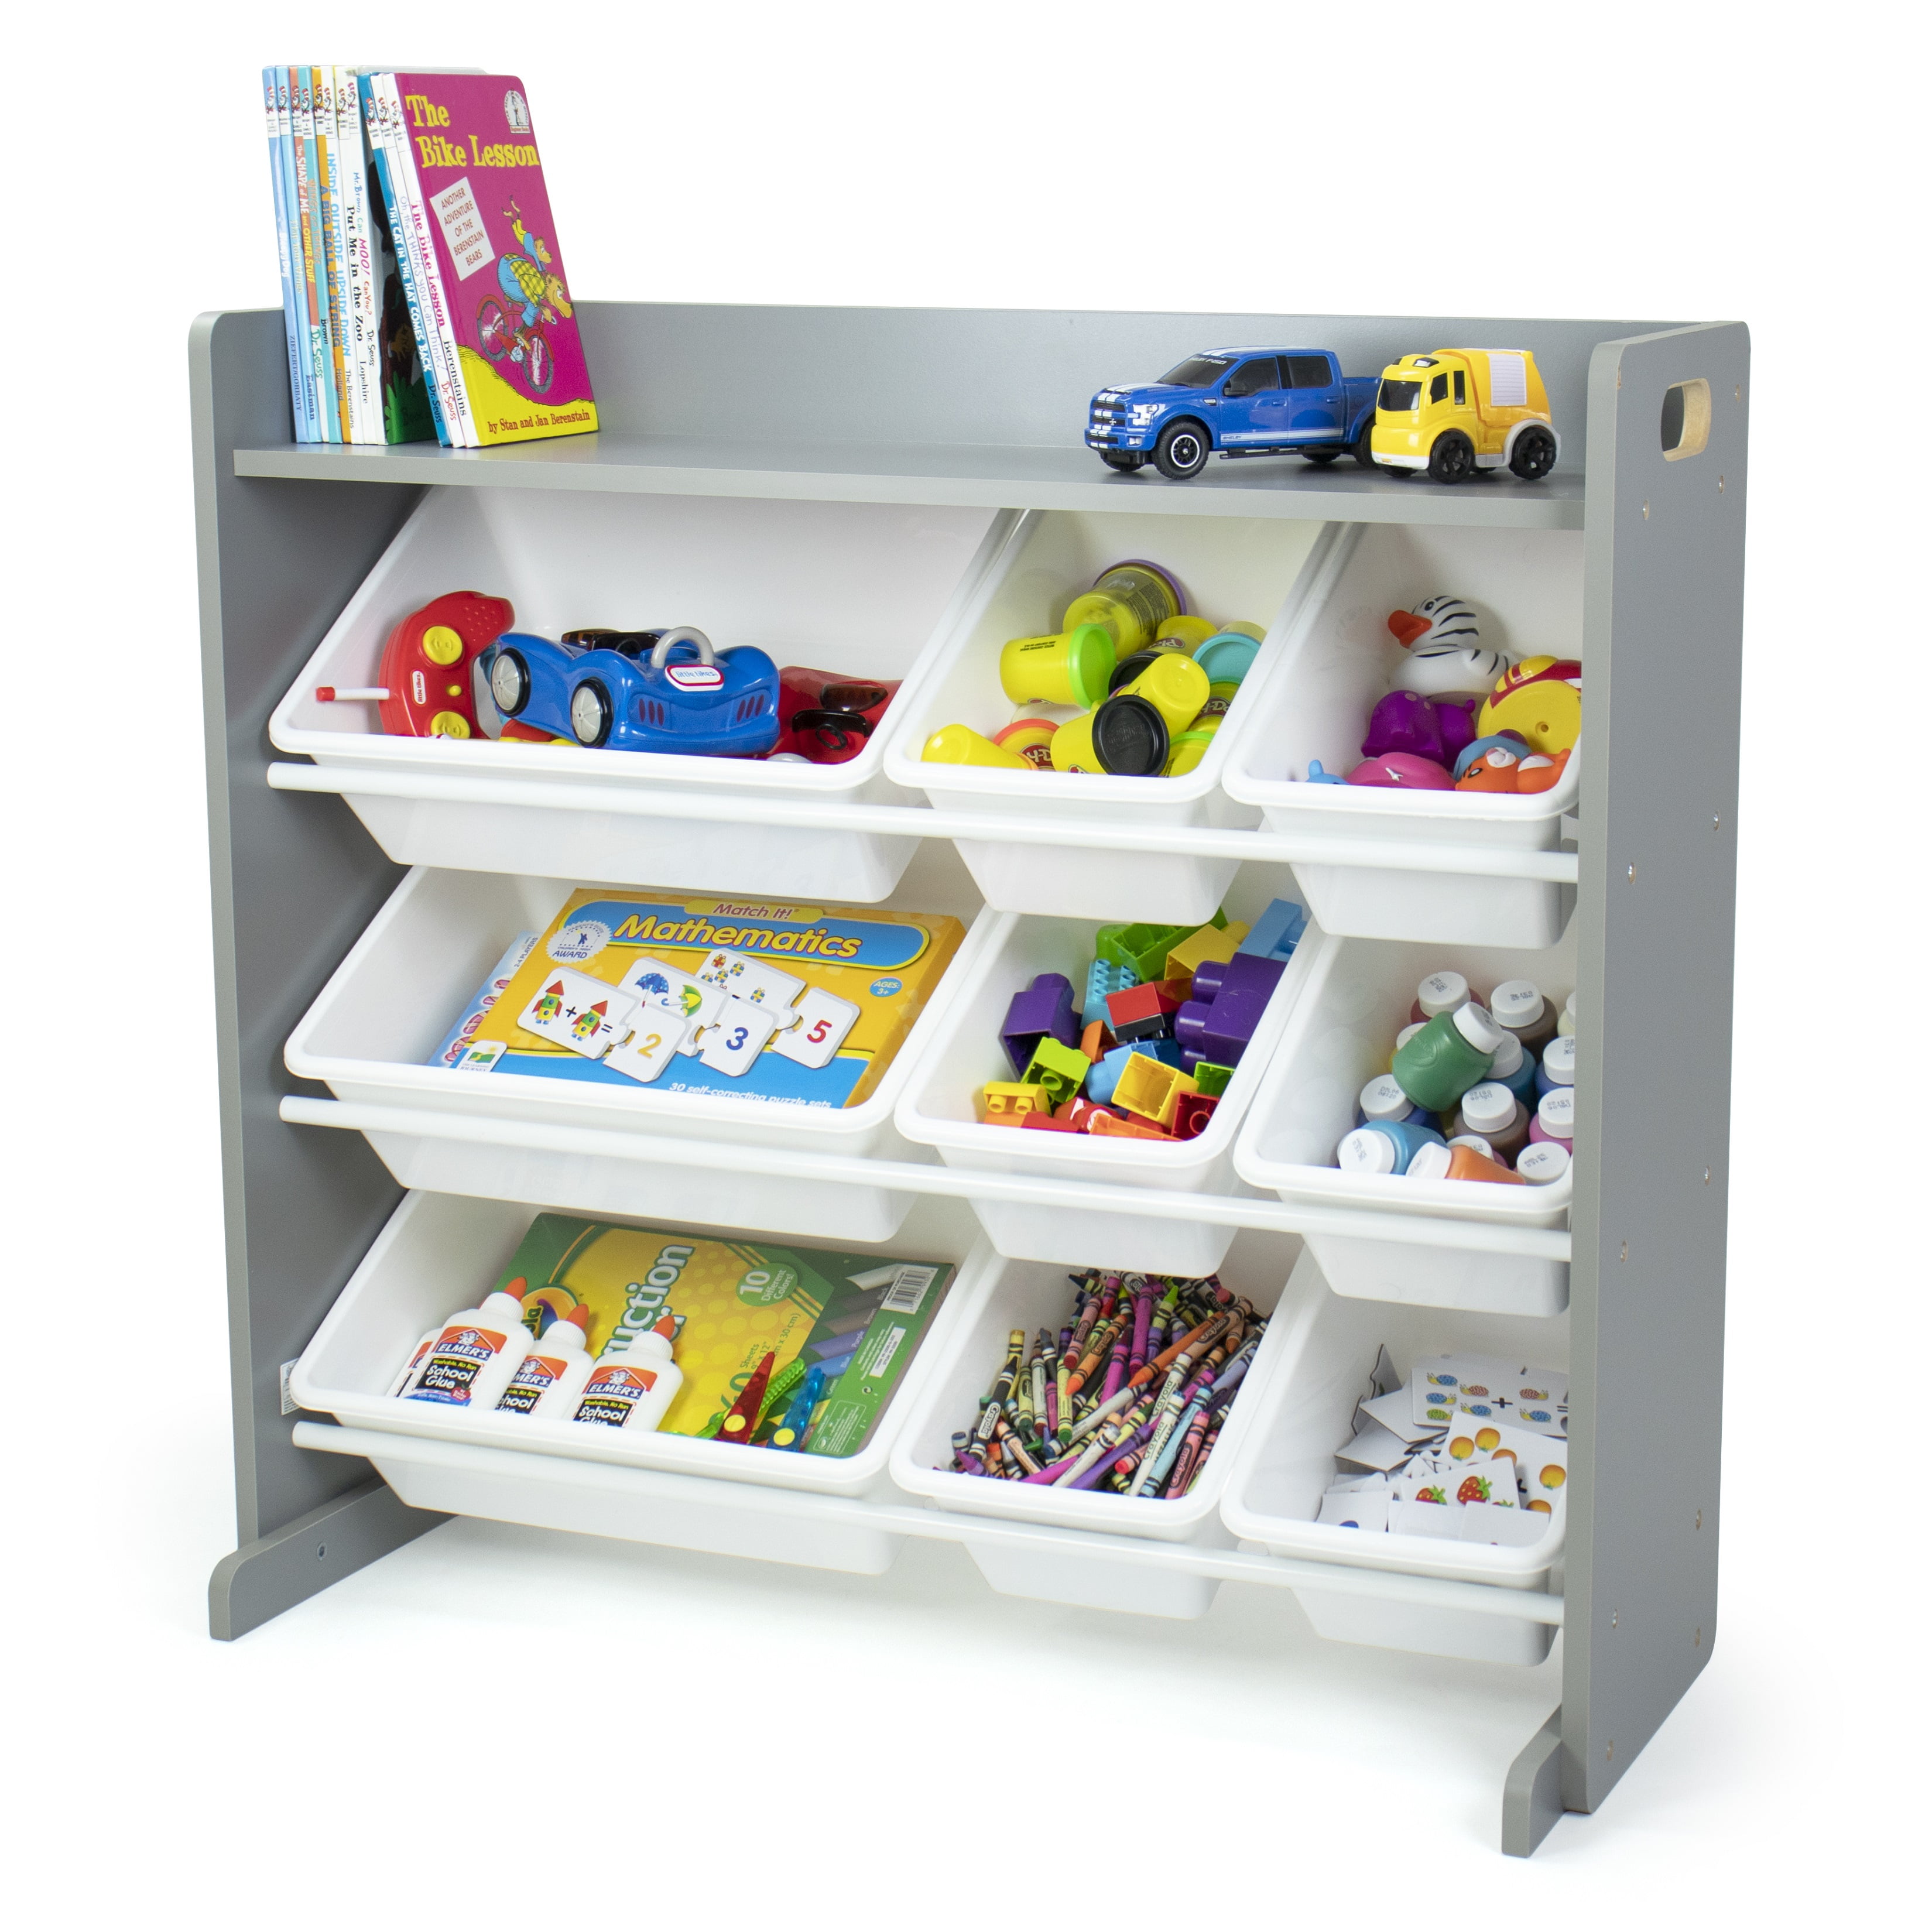 Costway Kids Toy Storage Organizer Toddler Playroom Furniture w/ Plastic  Bins Cabinet Pink 